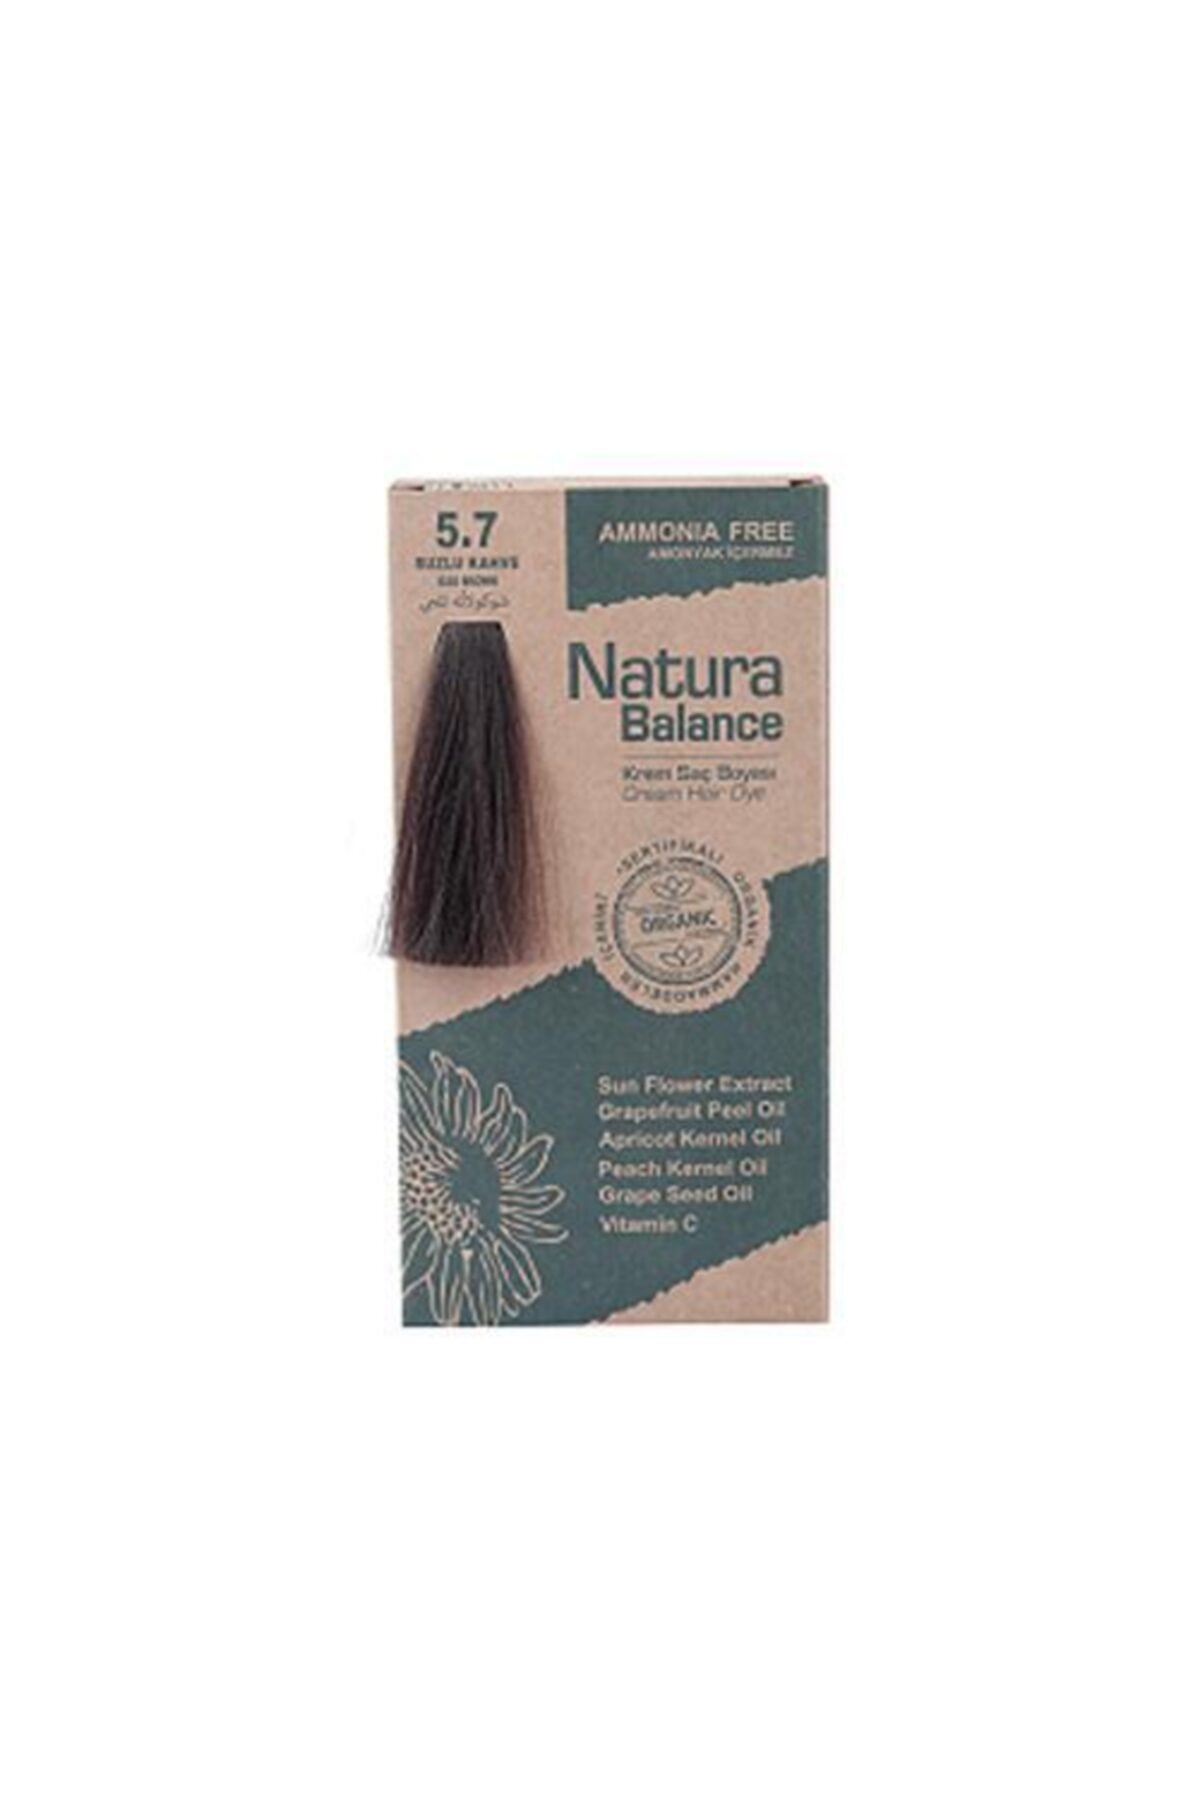 NATURABALANCE Natura Balance - Organik Krem Saç Boyası 5.7 Buzlu Kahve 60ml